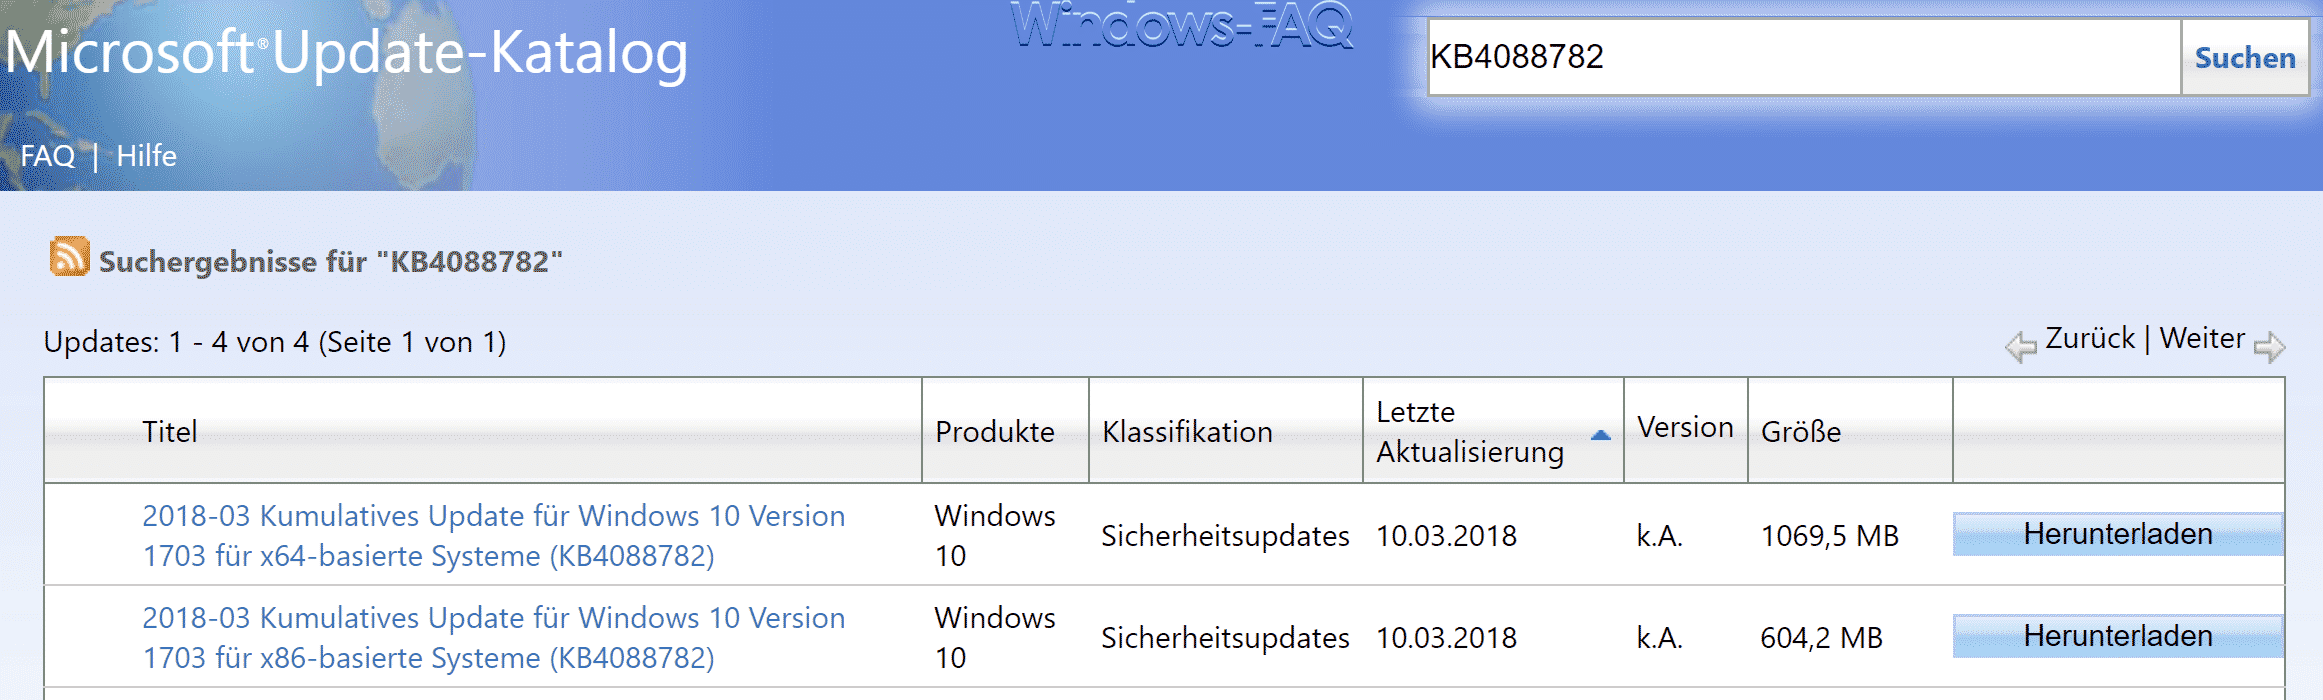 Update KB4088782 für Creators Update 1703 erschienen Build 15063.966